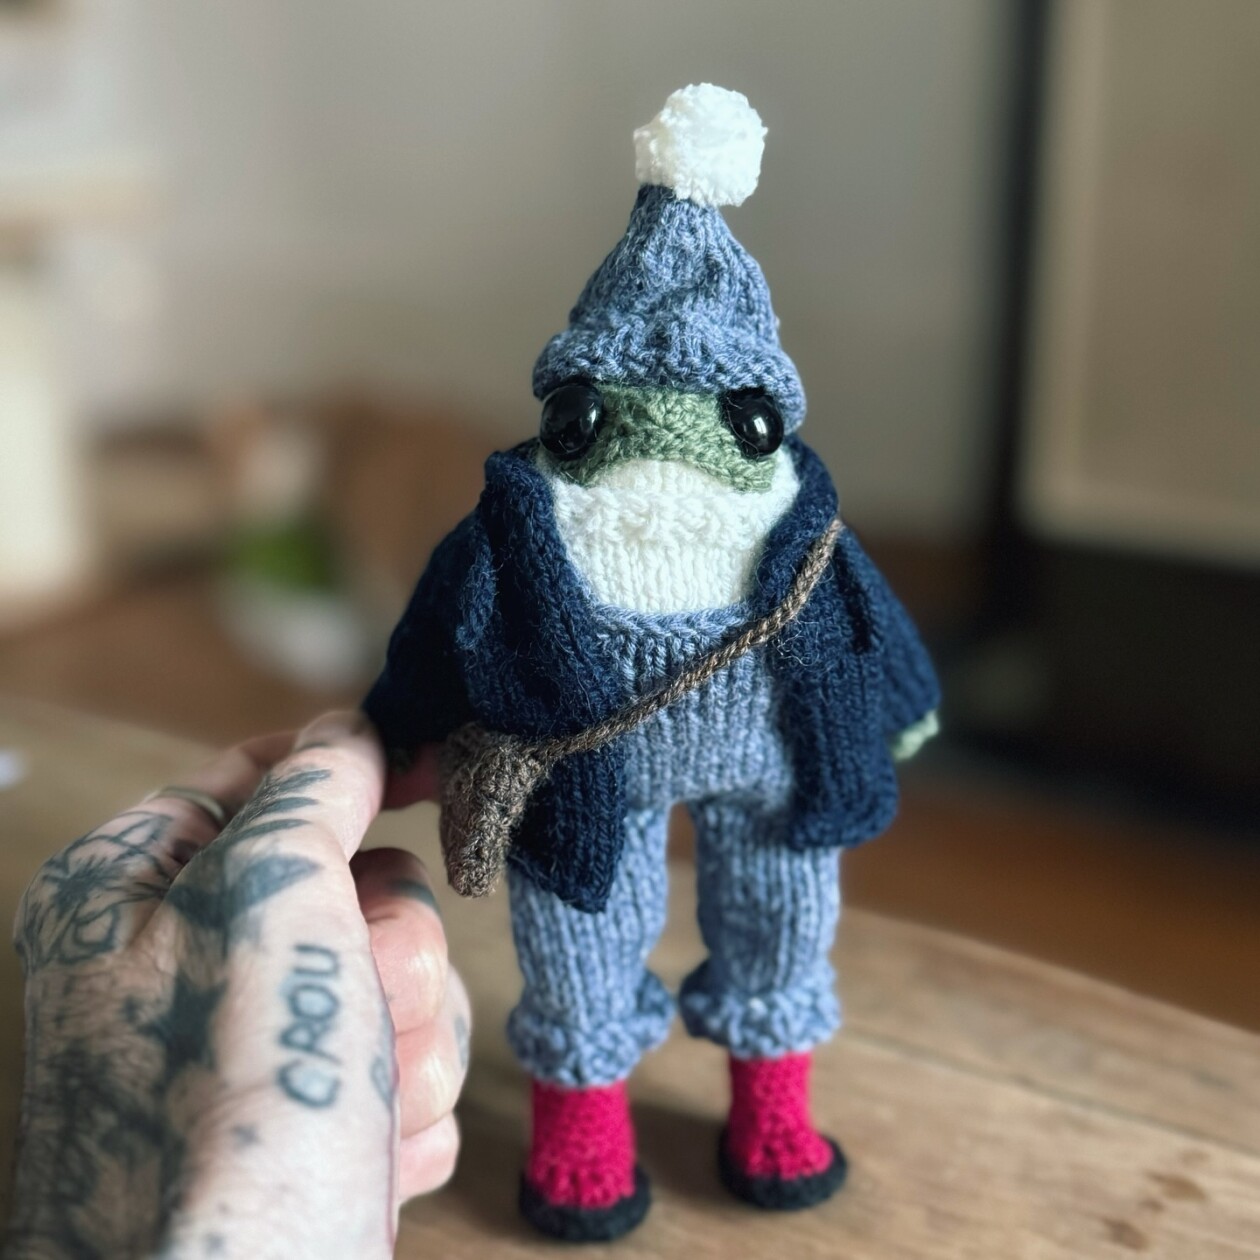 Enchanting Anthropomorphized Frog Crochet Patterns By Elliot (8)